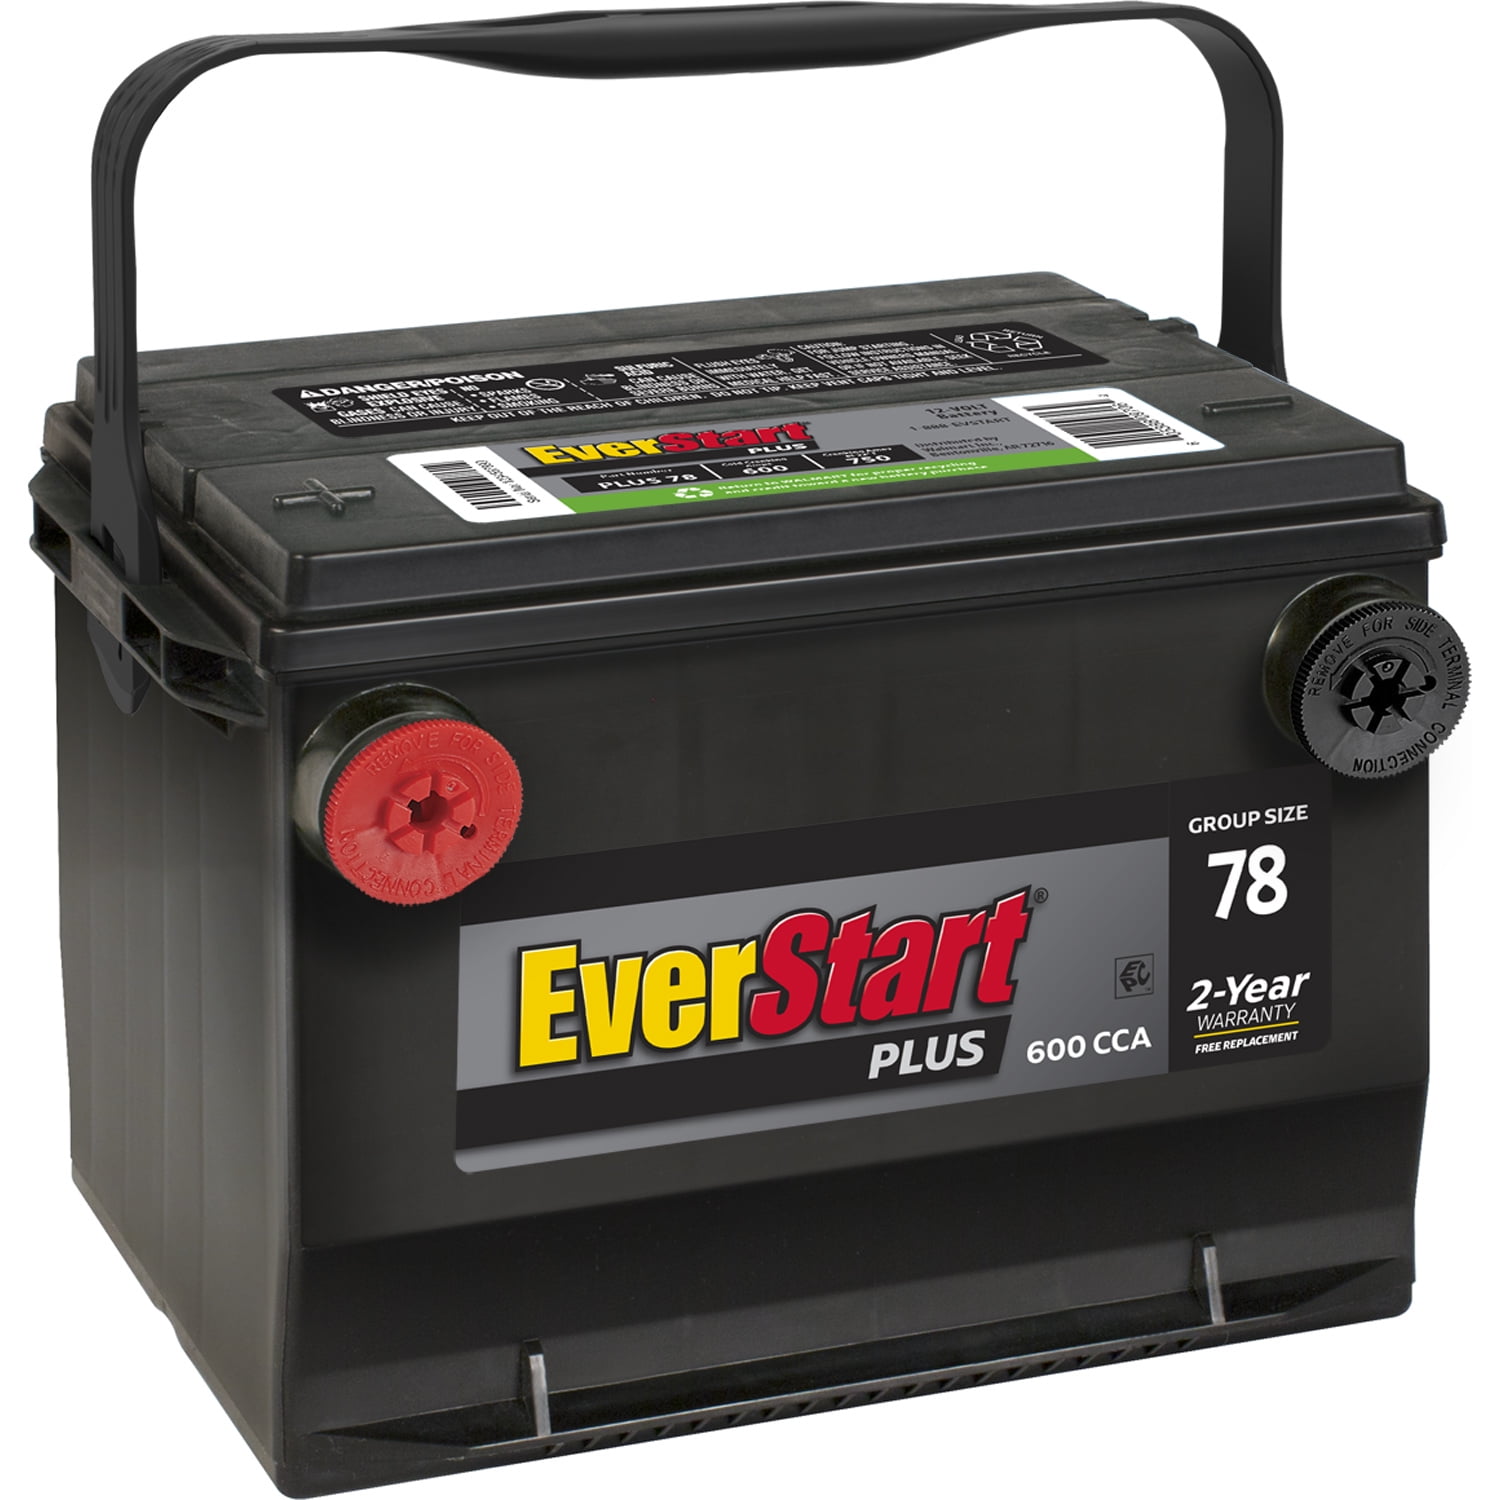 EverStart Plus Lead Acid Automotive Battery, Group 78 12 Volt, 600 CCA